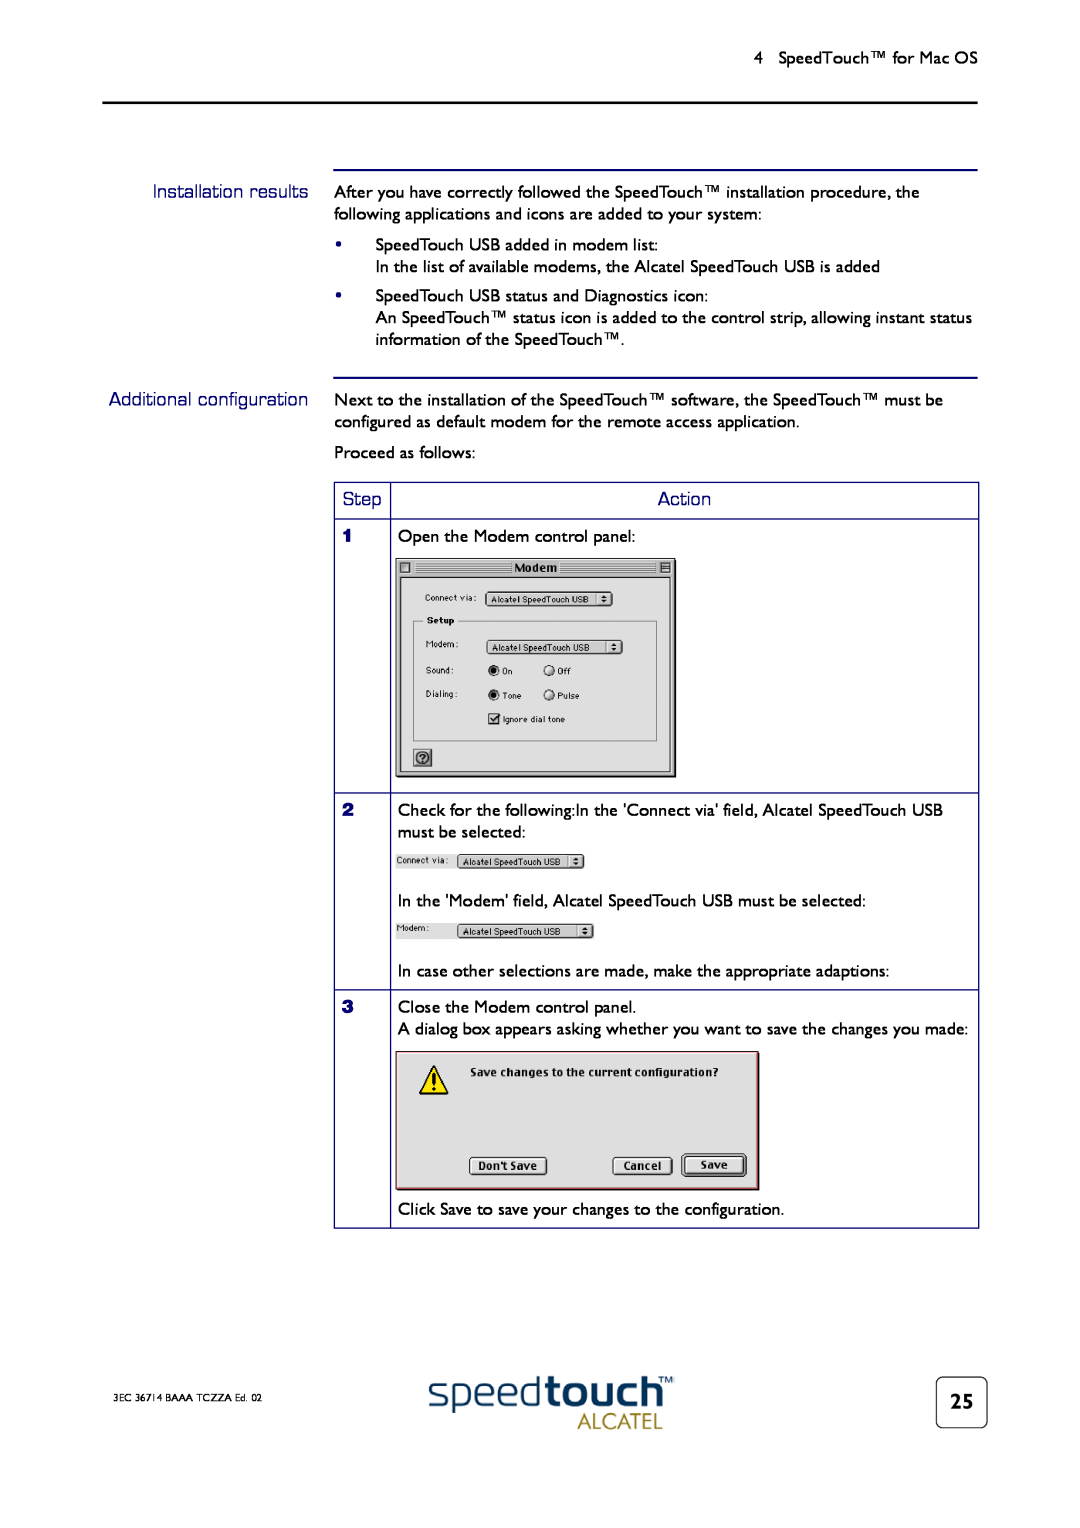 RCA 300 manual SpeedTouch for Mac OS 